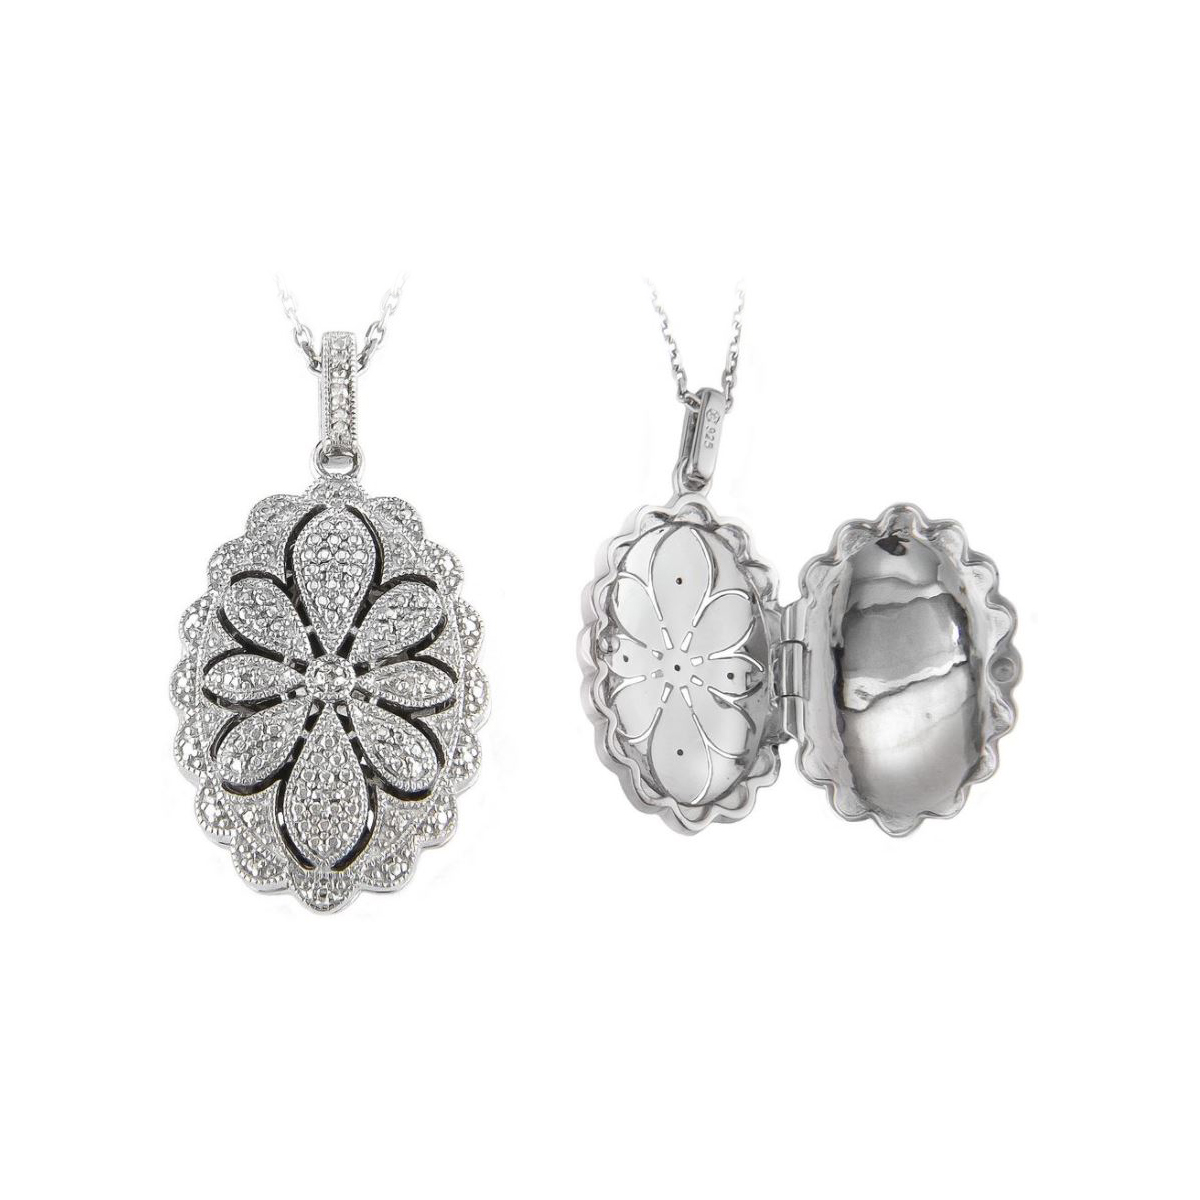 Sterling Silver Diamond Locket Necklace